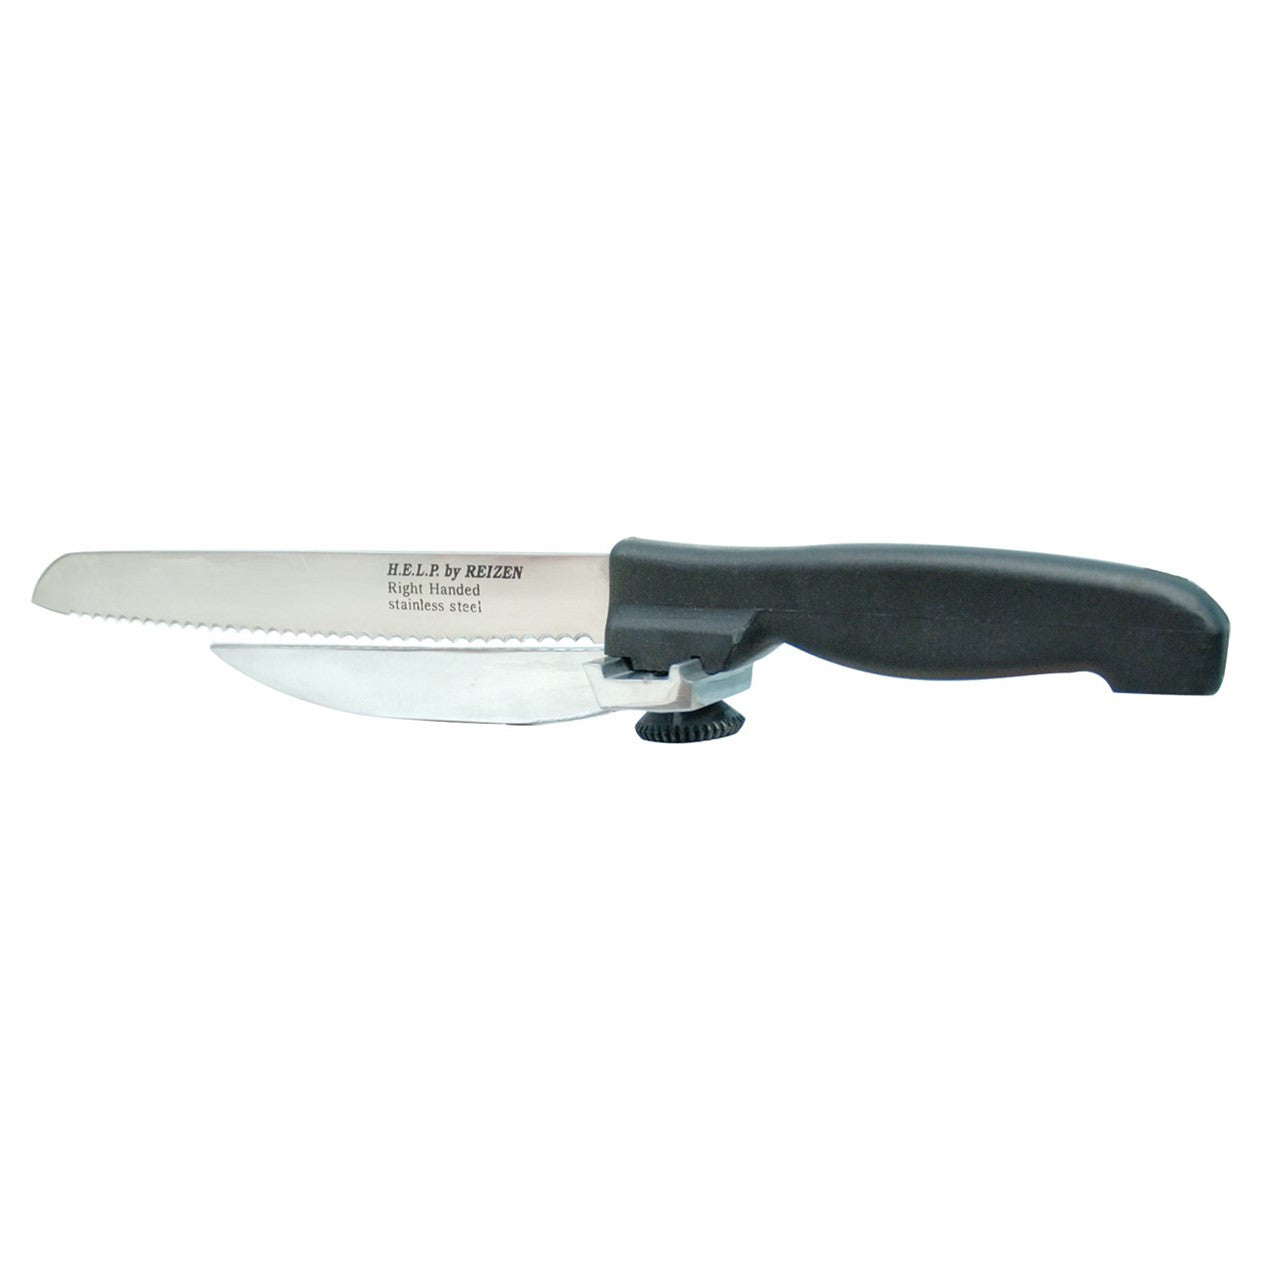 Adjustable knife